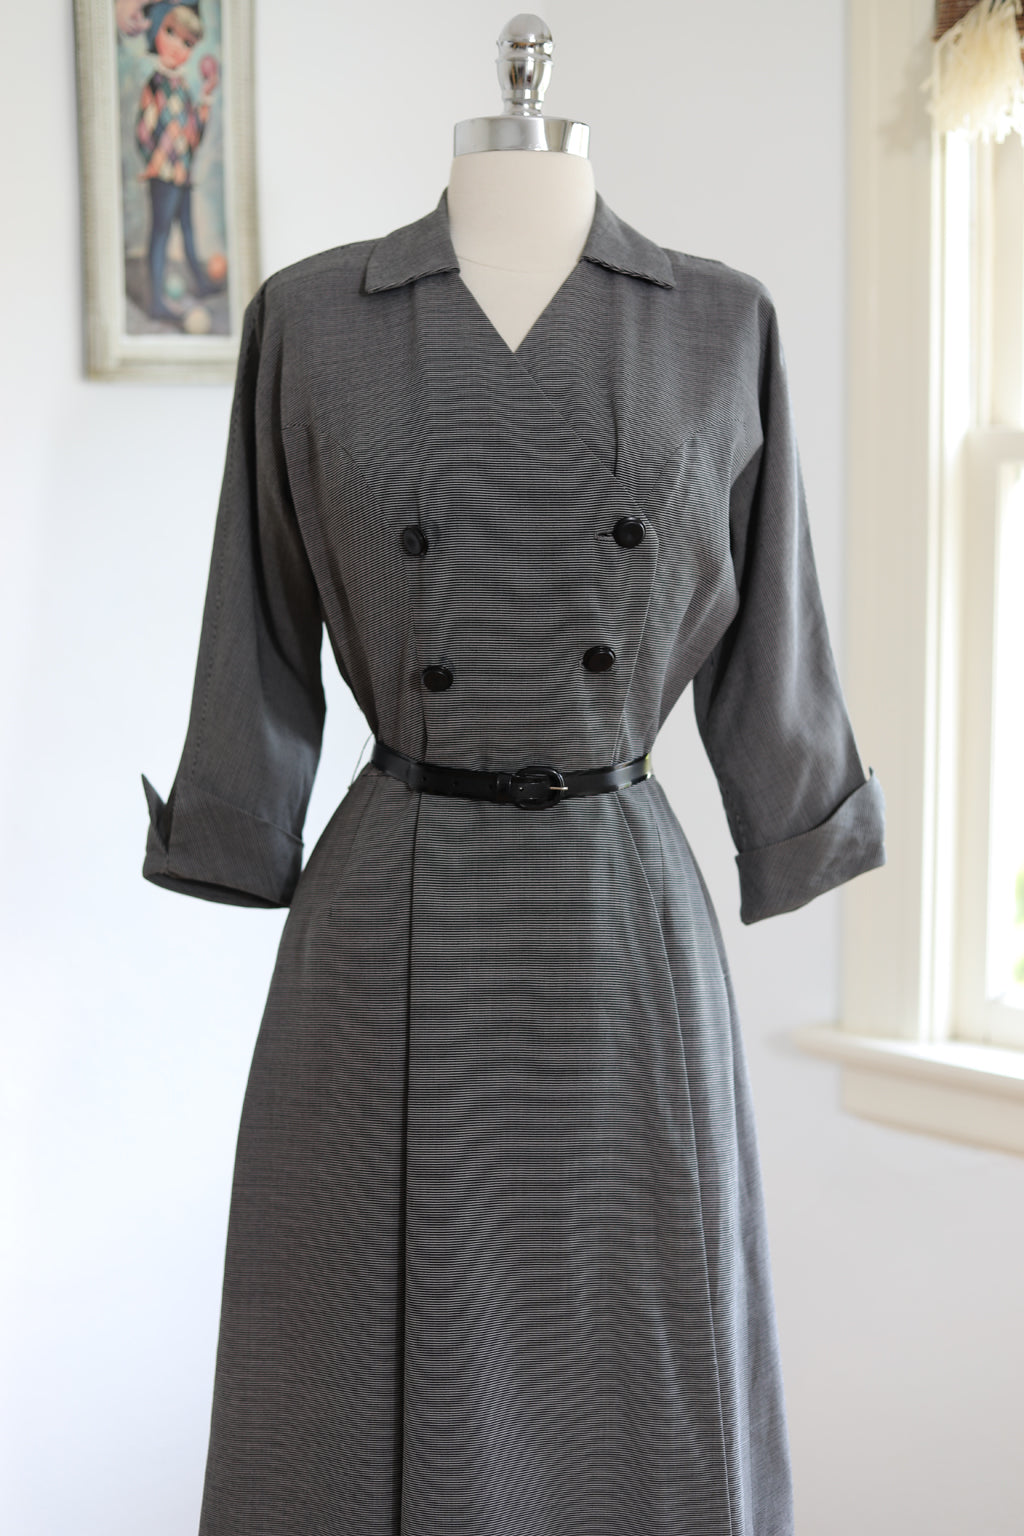 Vintage 1940s Dress - SHARP Black White Woven Stripe Princess Coat Dress w Bakelite Size M